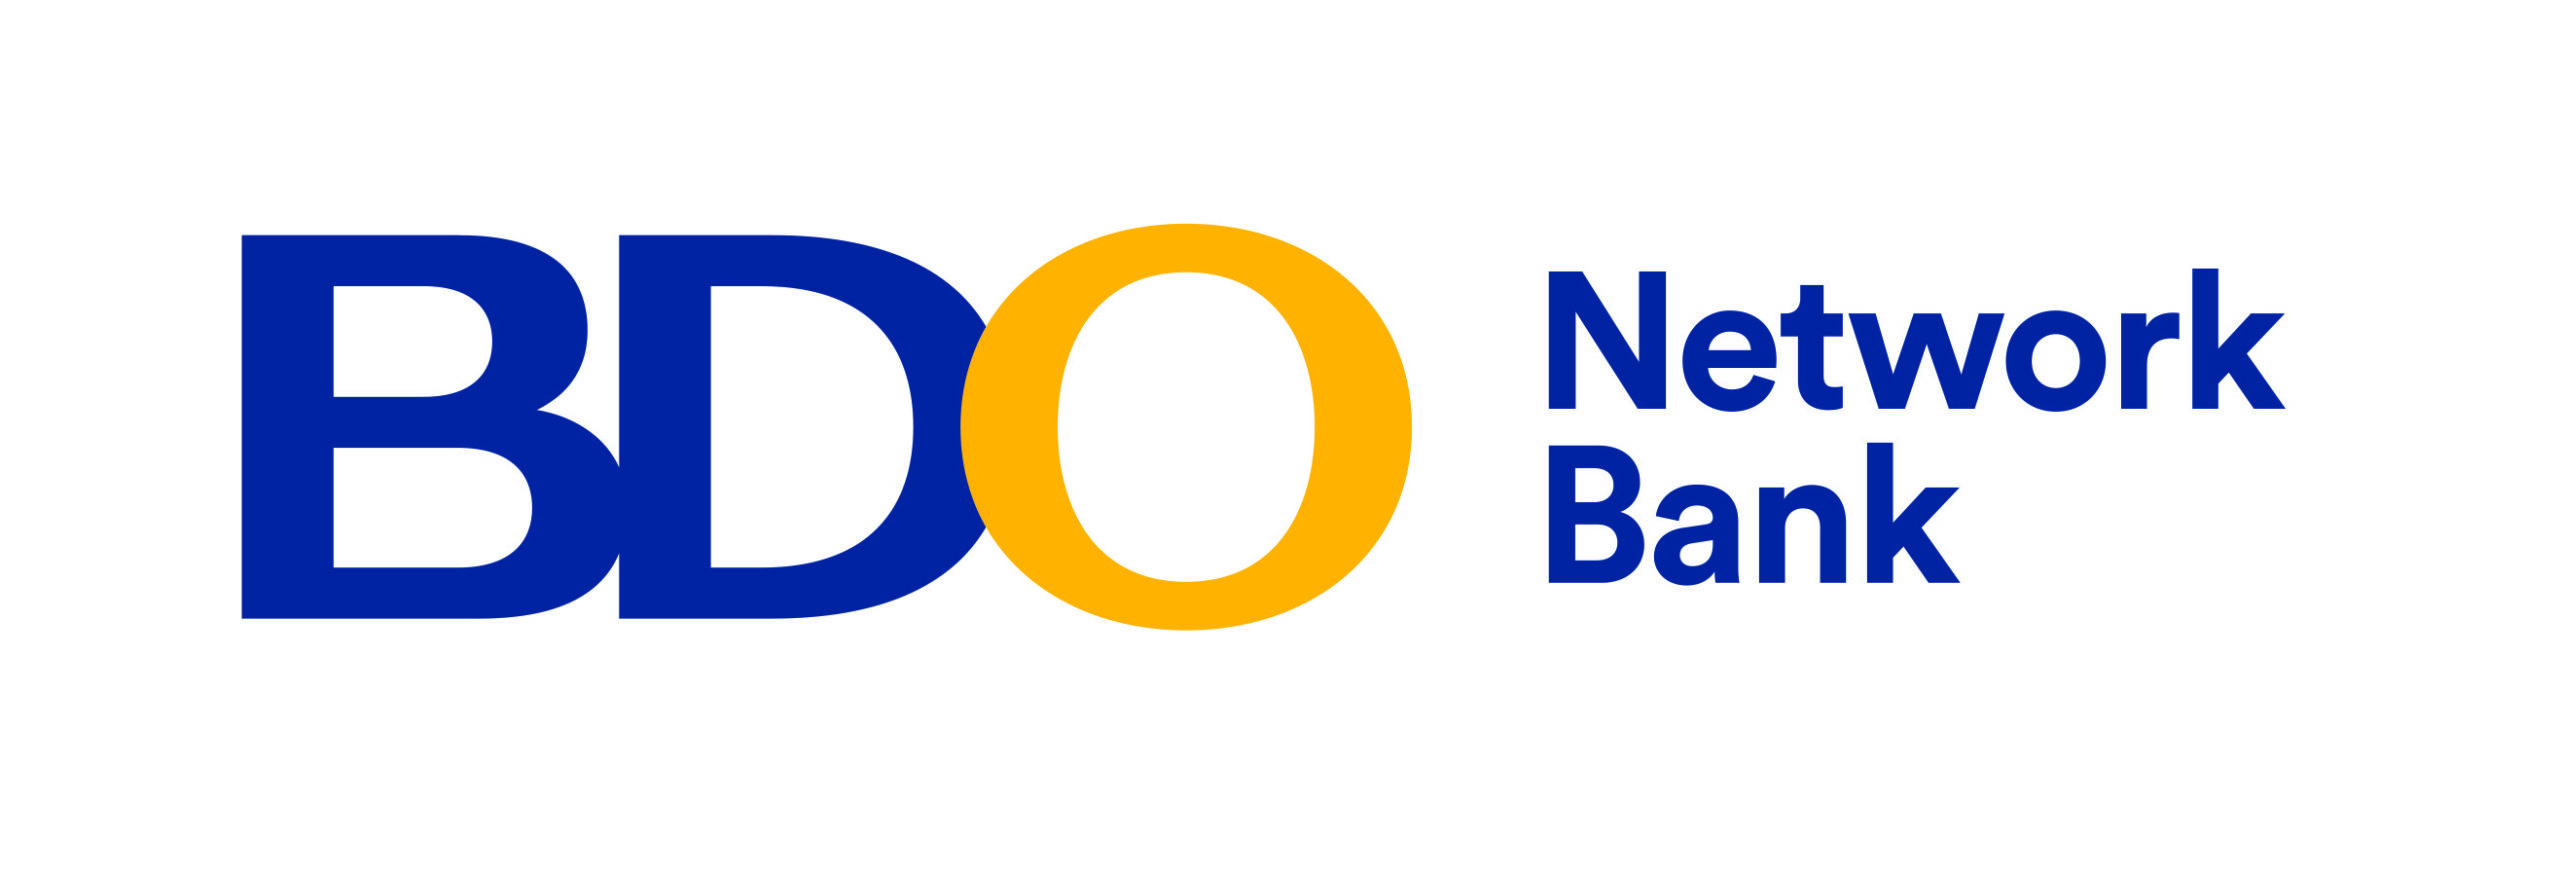 Bancnet. Net Banking. Network bank